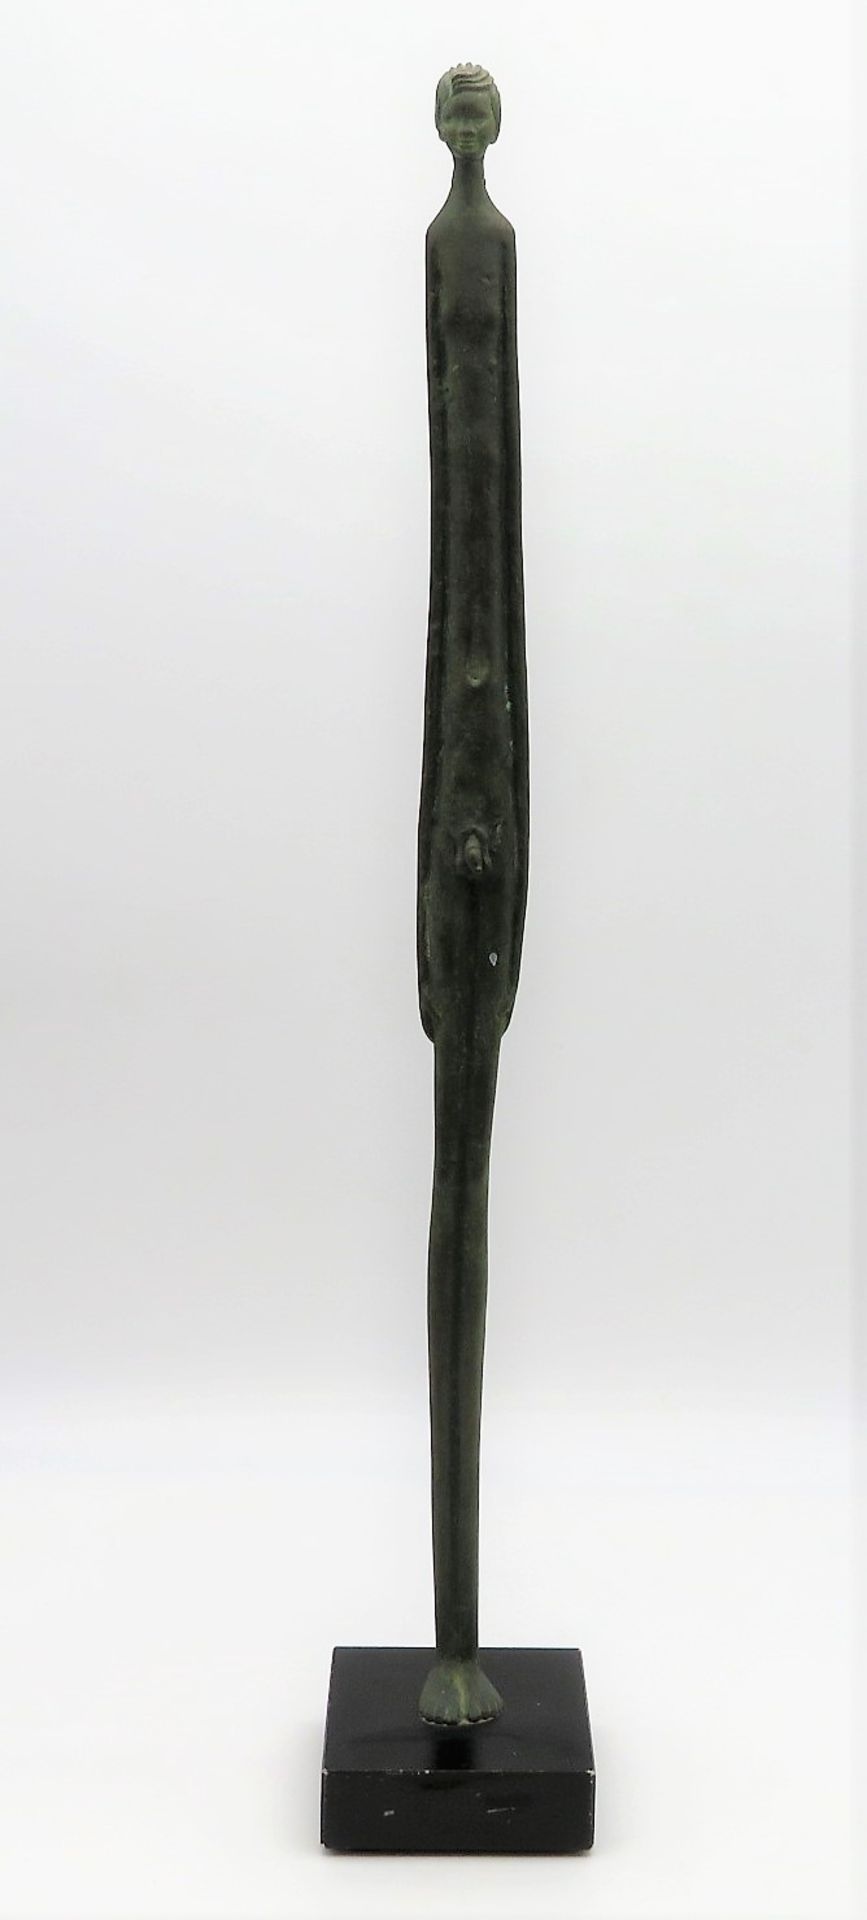 Nach Giacometti, Stehender Jüngling, Bronze patiniert, quadratischer Marmorsockel, h 58 cm, d 4 cm.